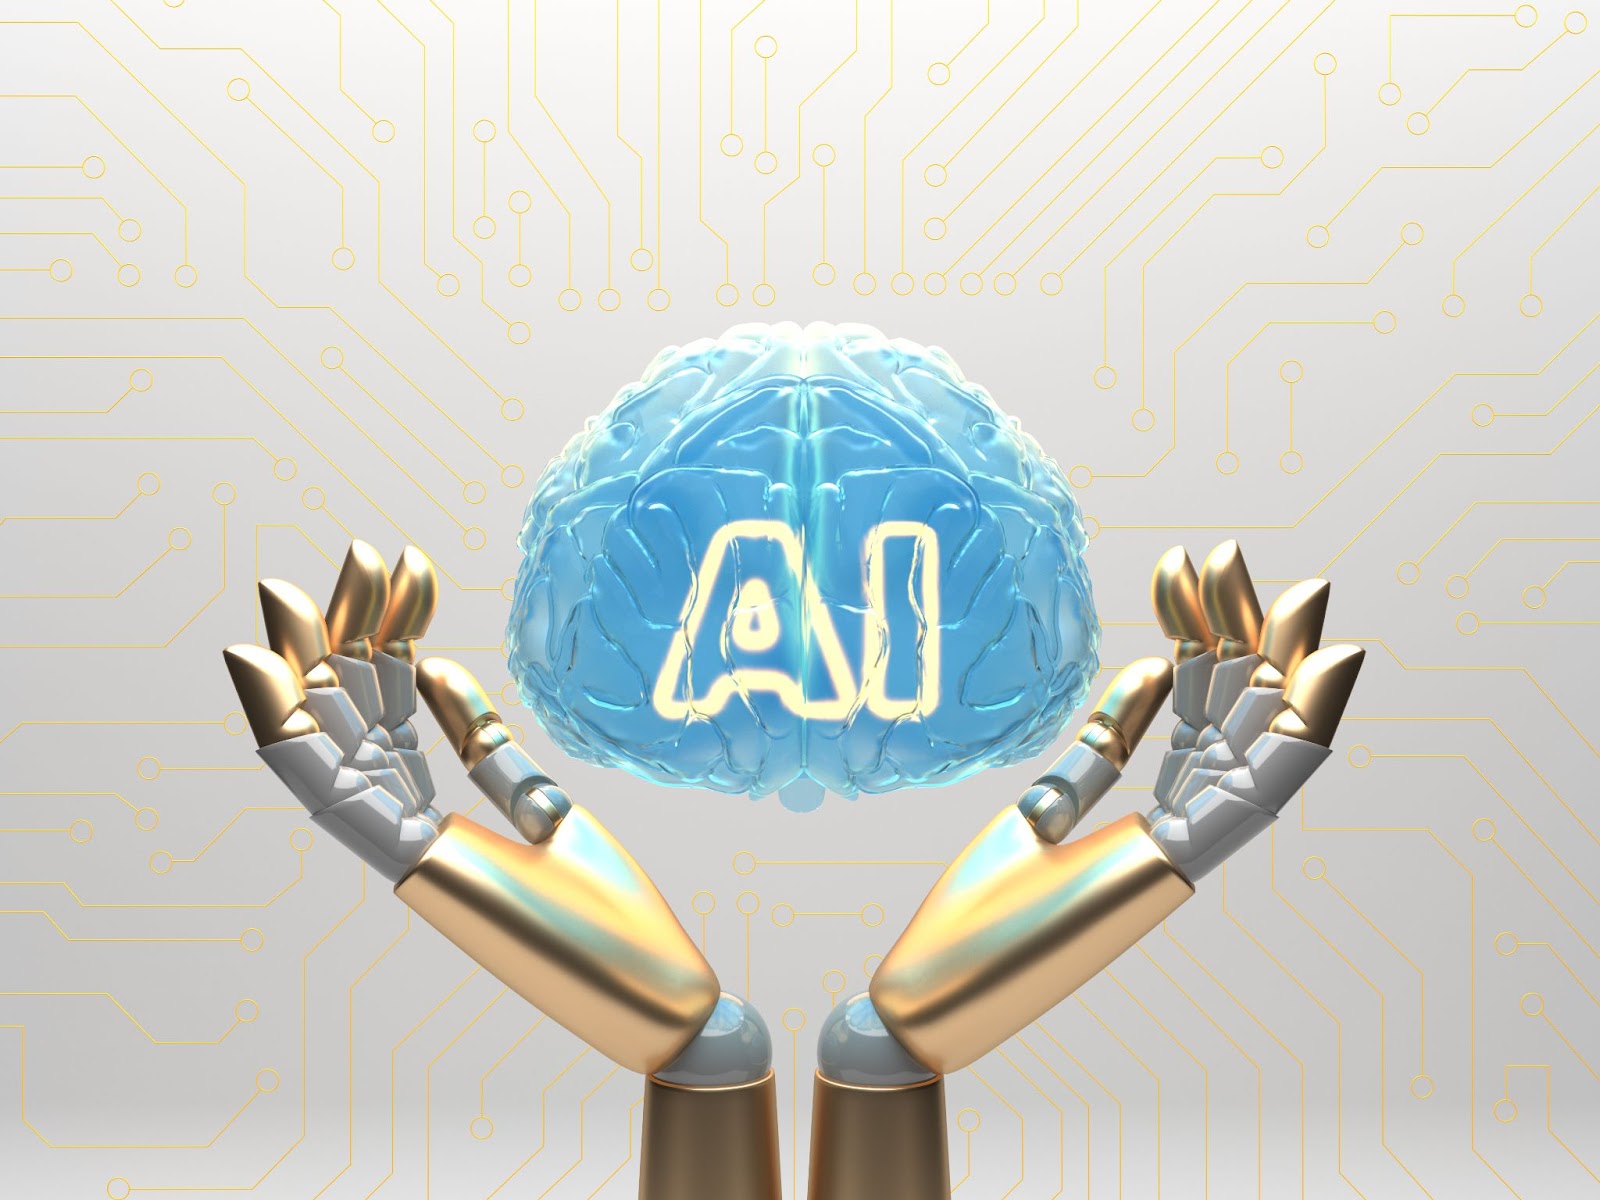 Hads holding a brainn model with AI sign